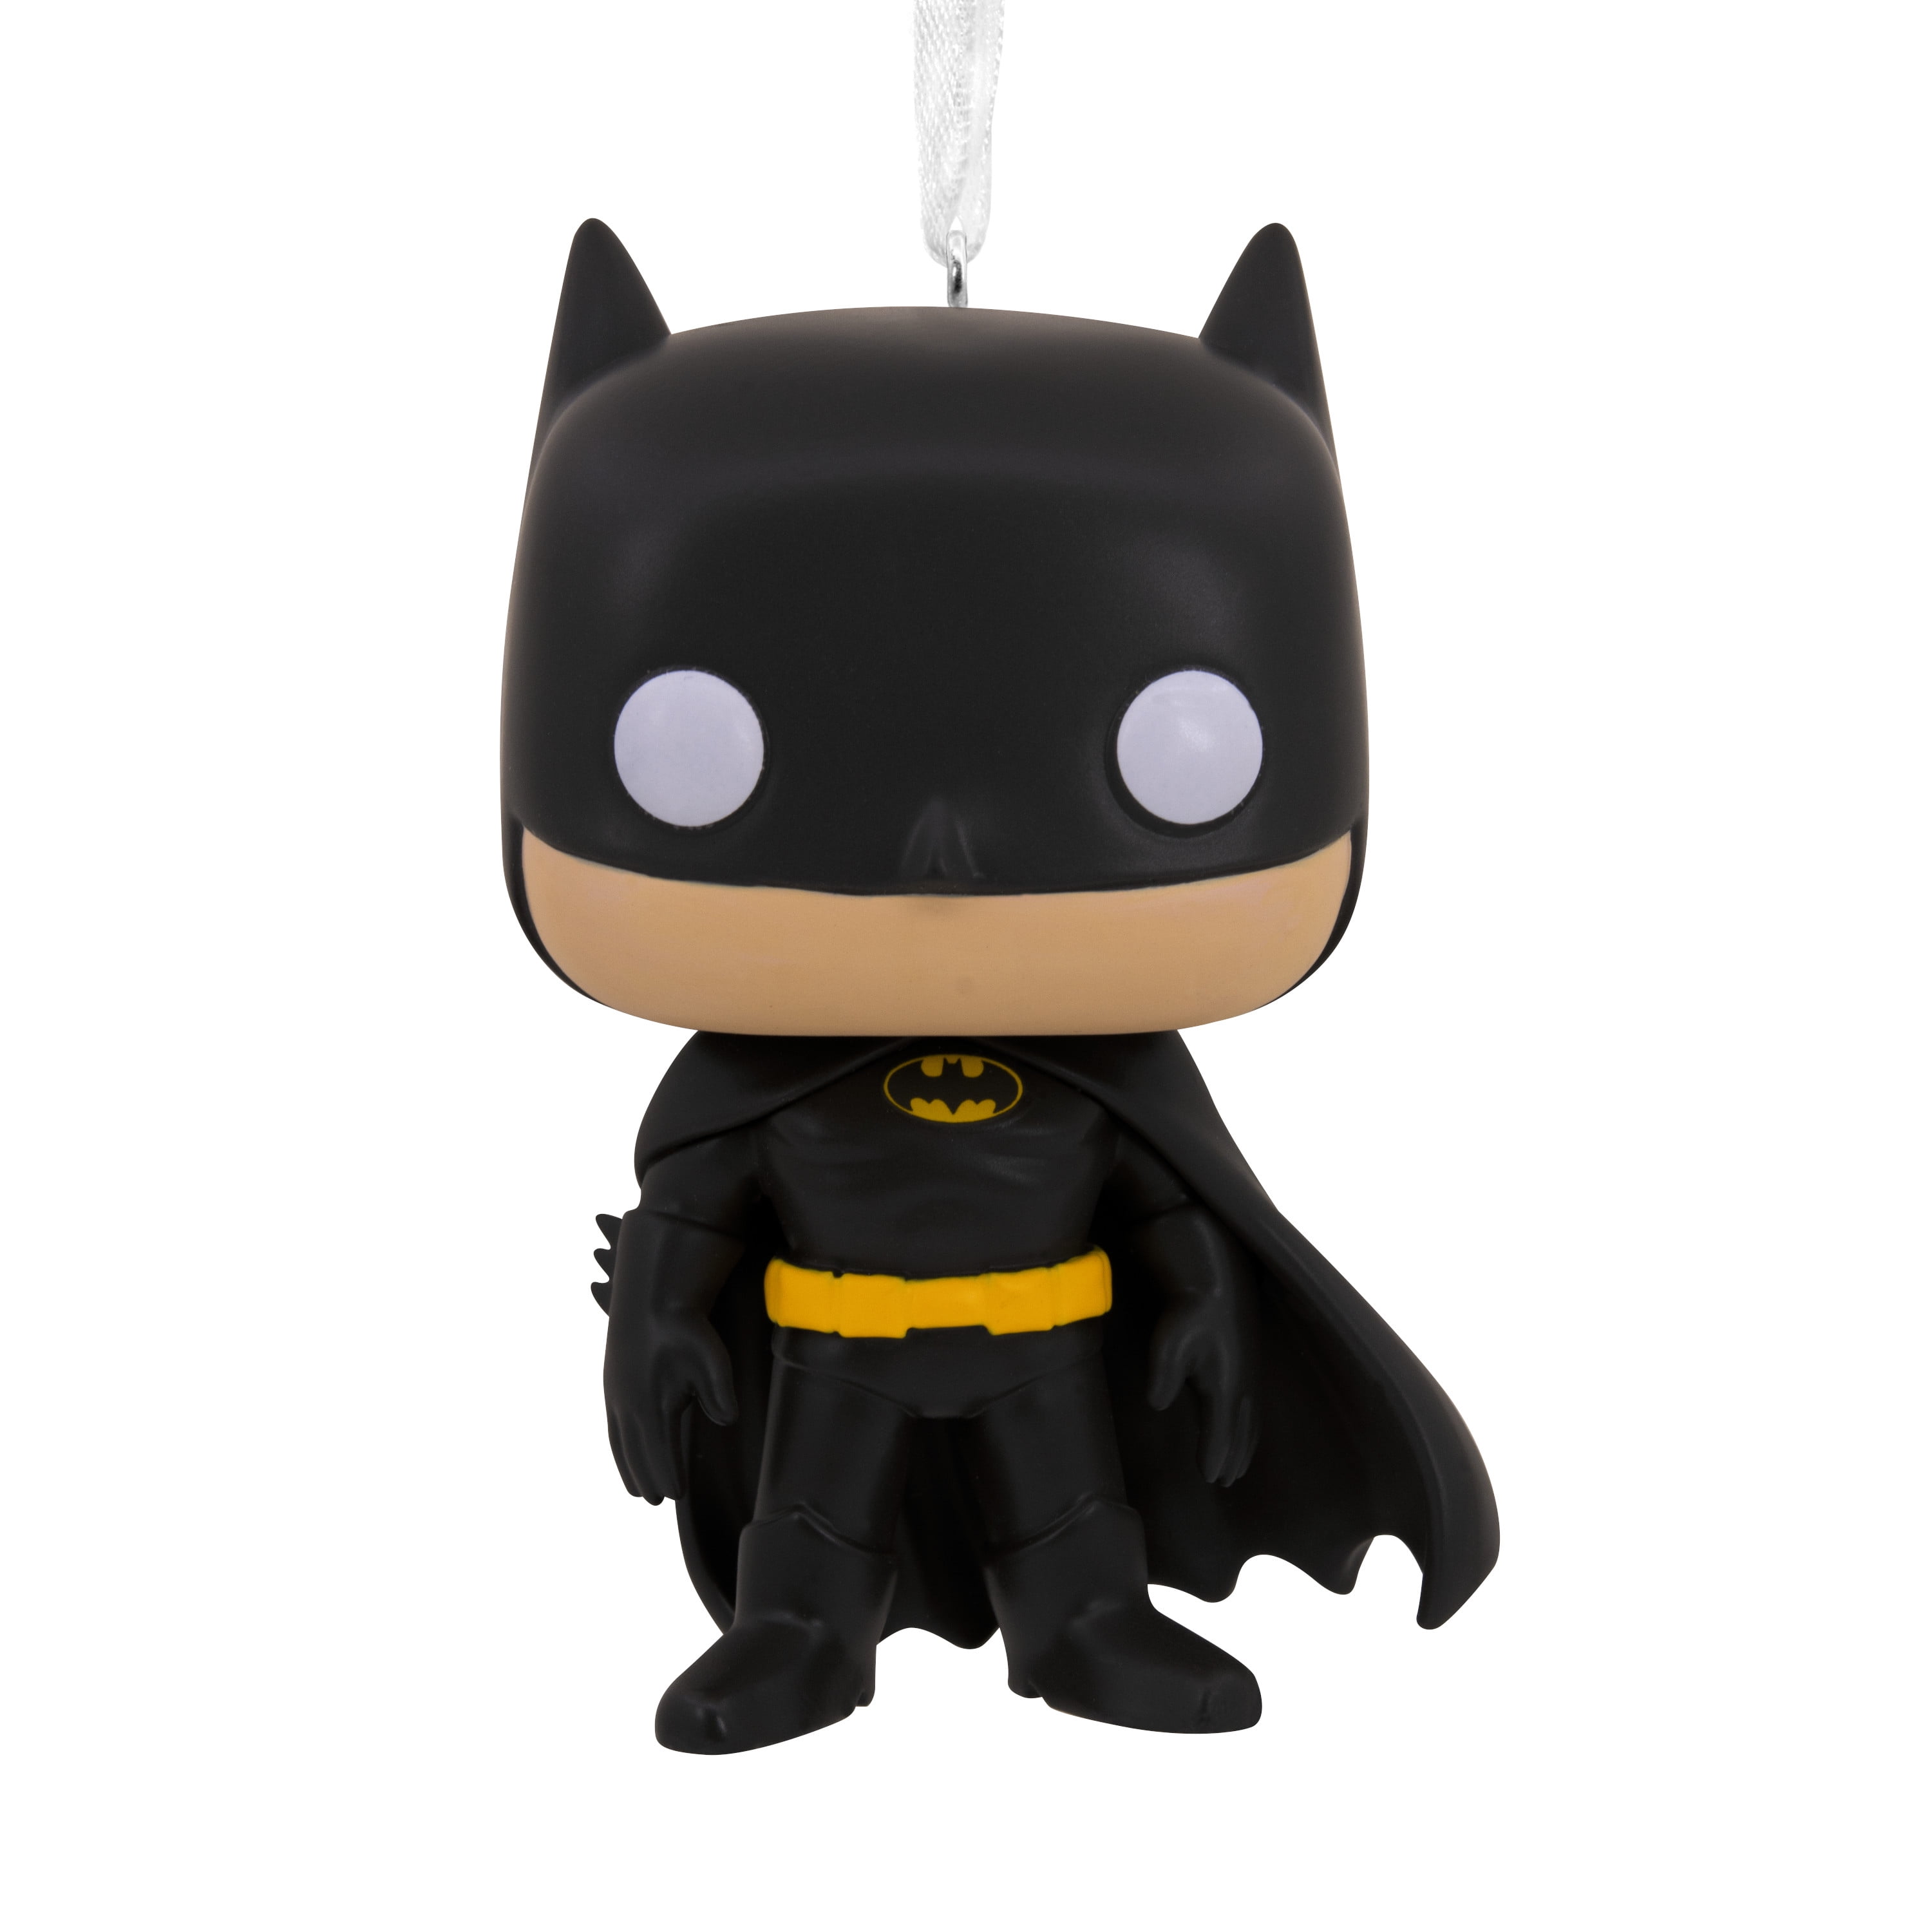 Hallmark Ornament (DC Batman Funko POP!) - Walmart Exclusive 